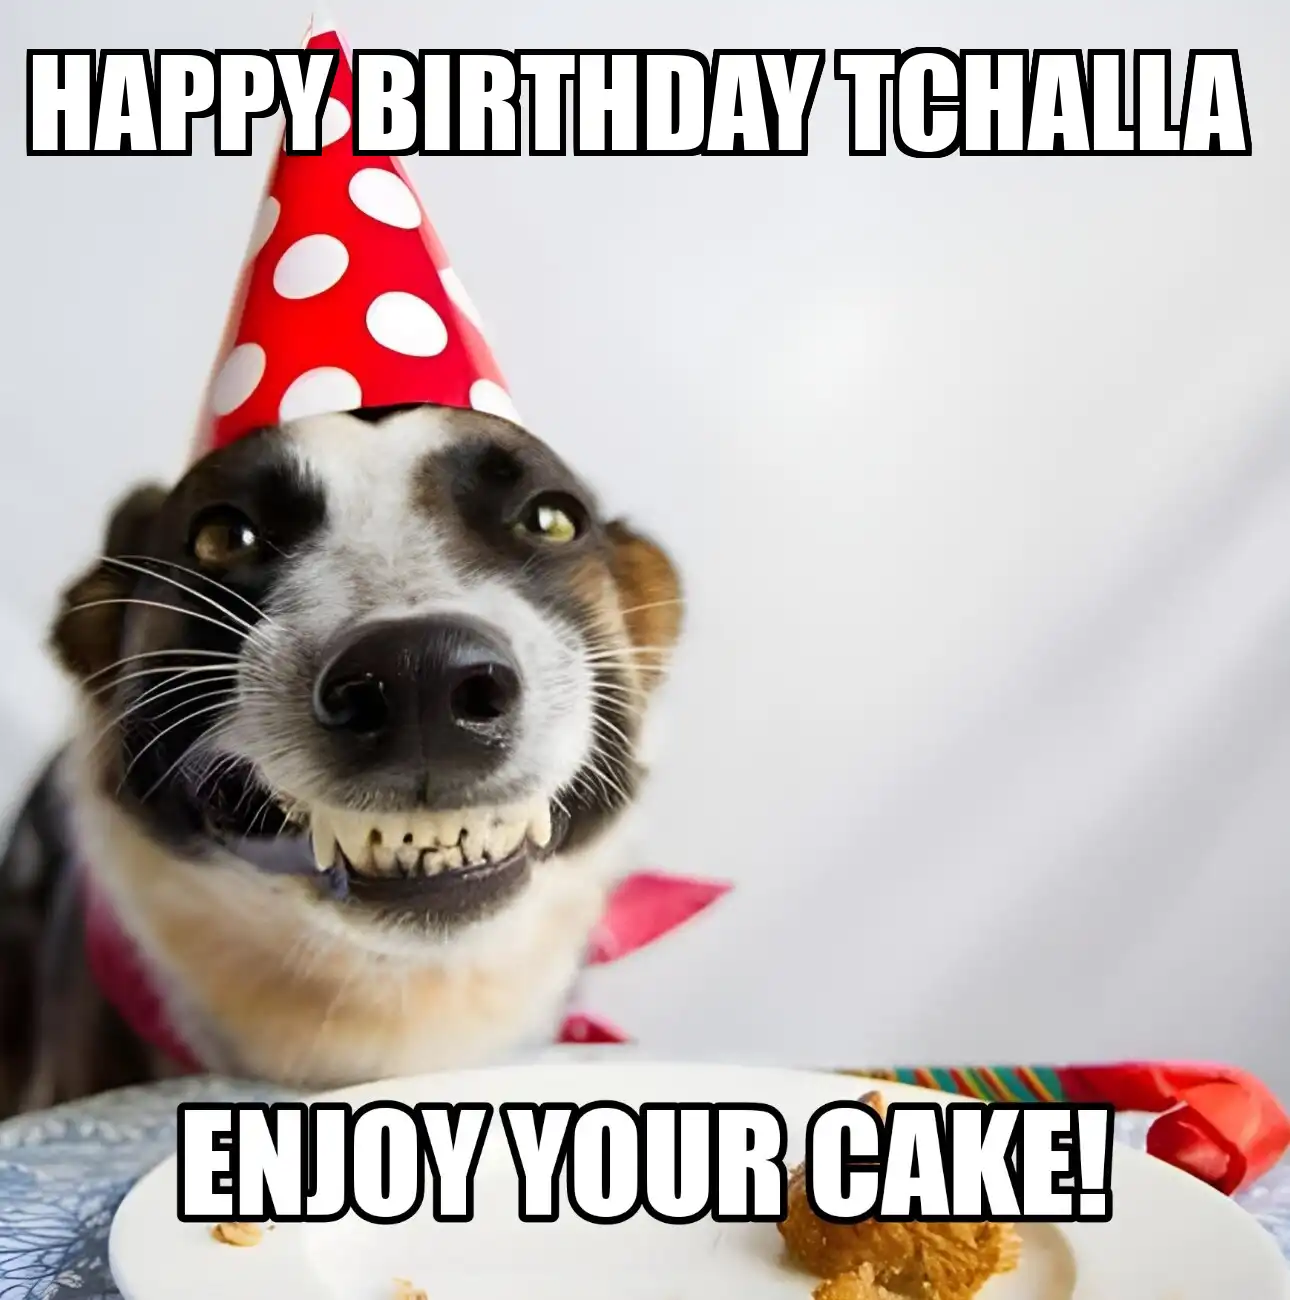 Happy Birthday Tchalla Enjoy Your Cake Dog Meme